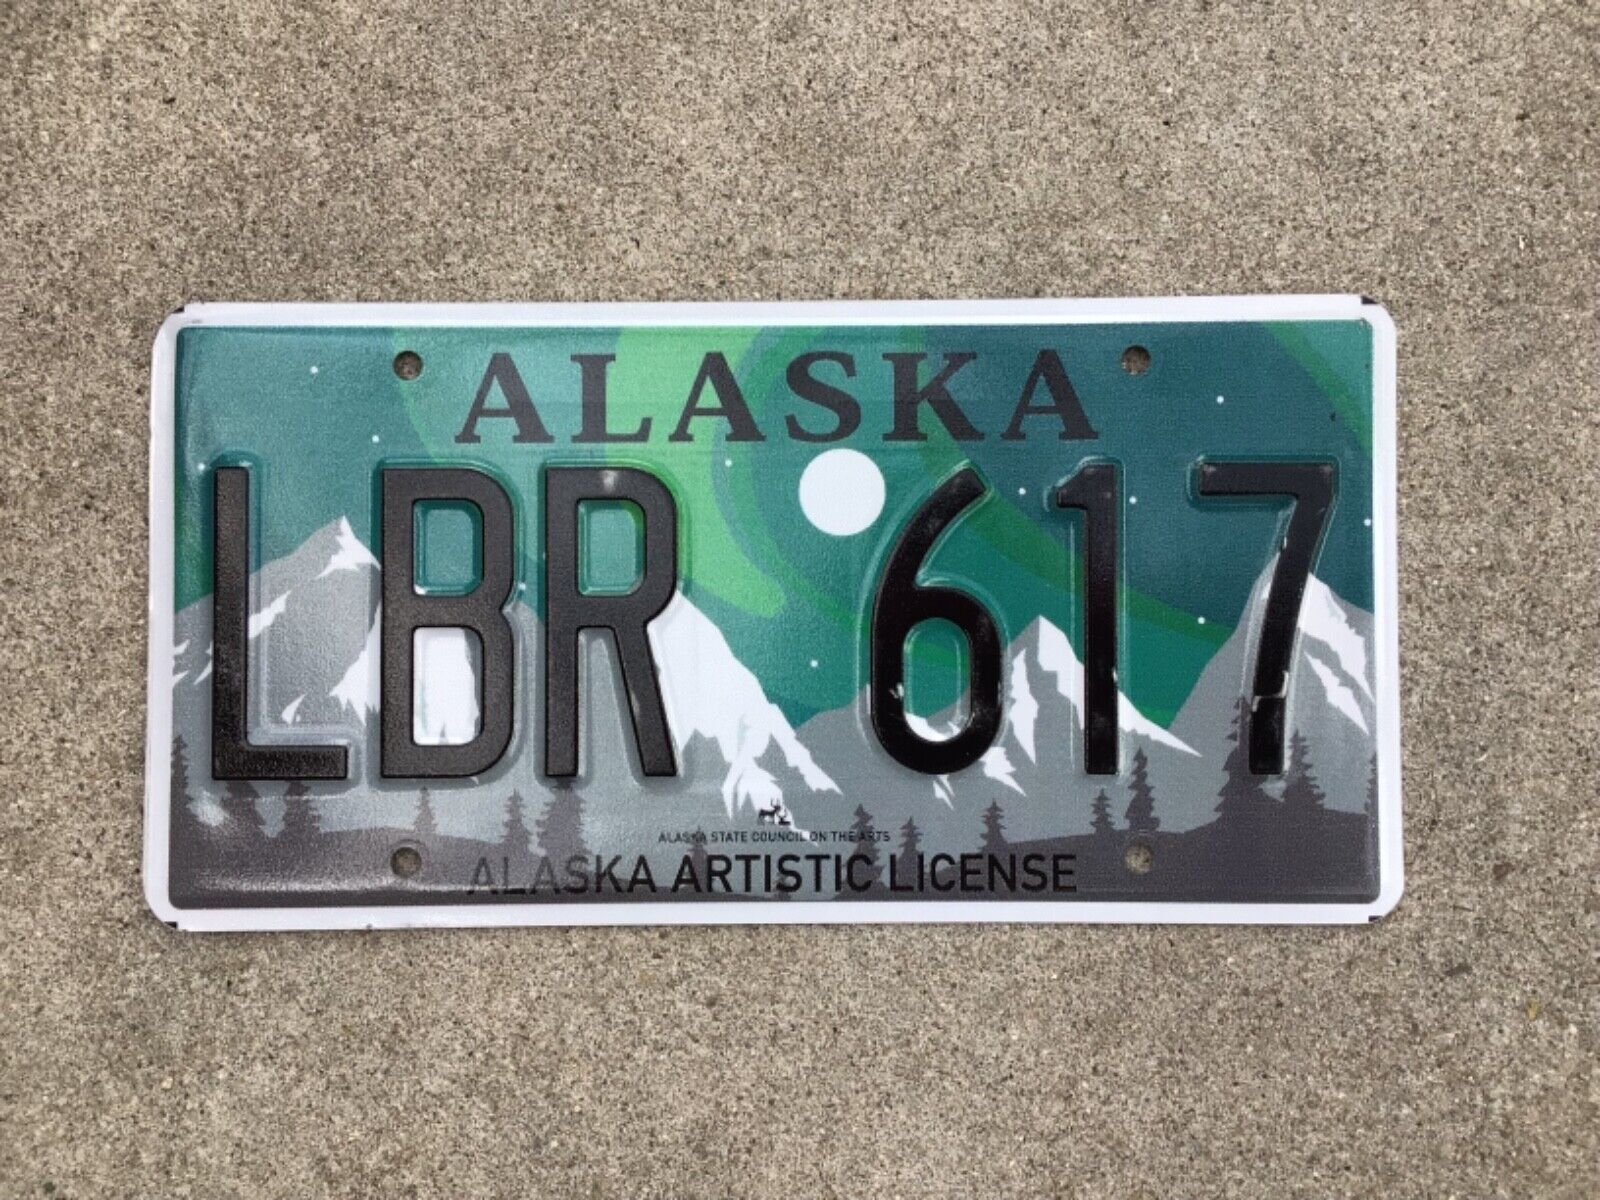 Alaska - Artistic - License Plate